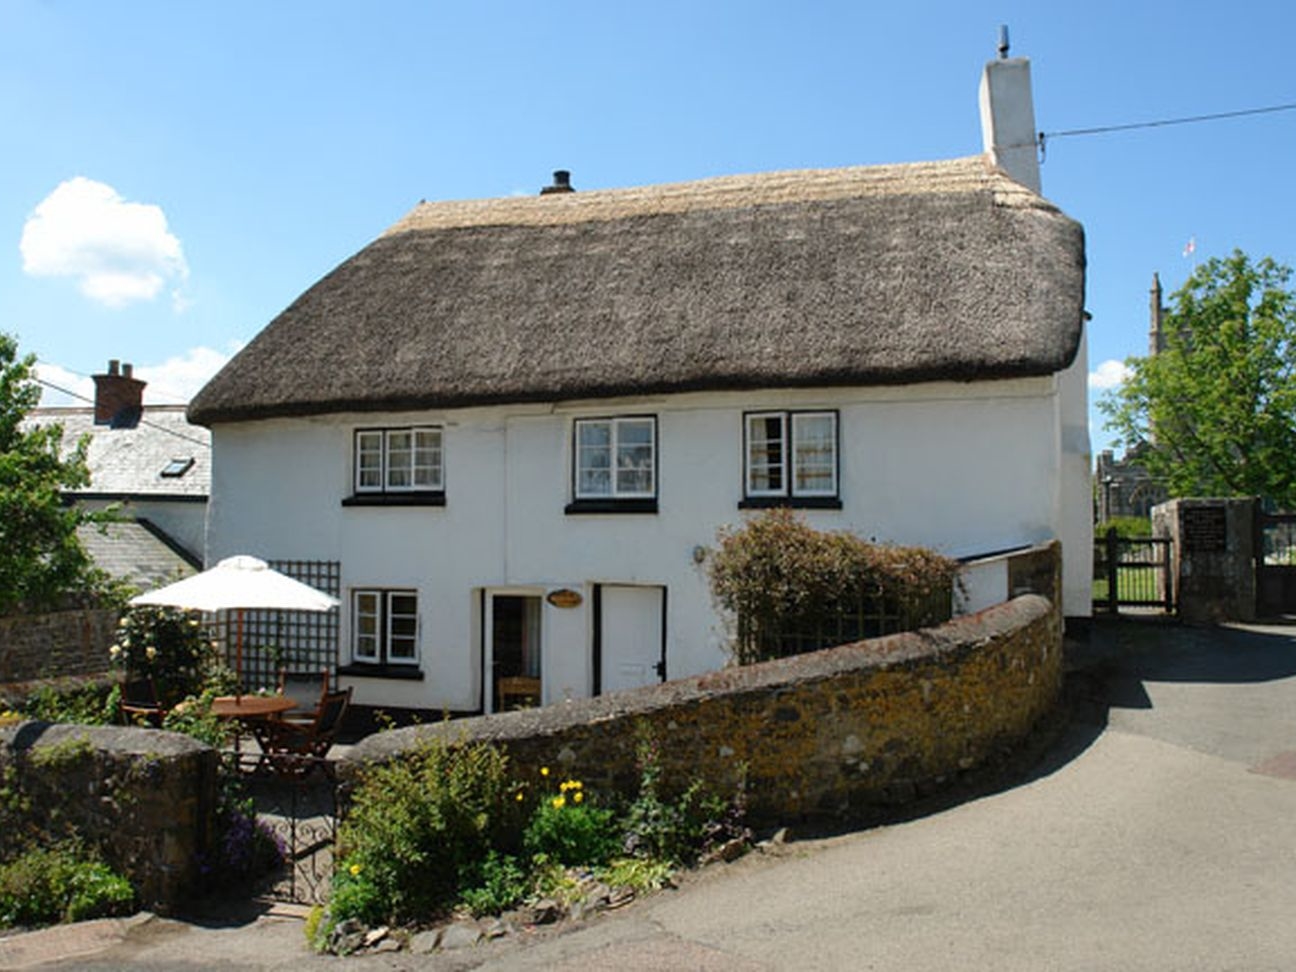 Primrose Cottage